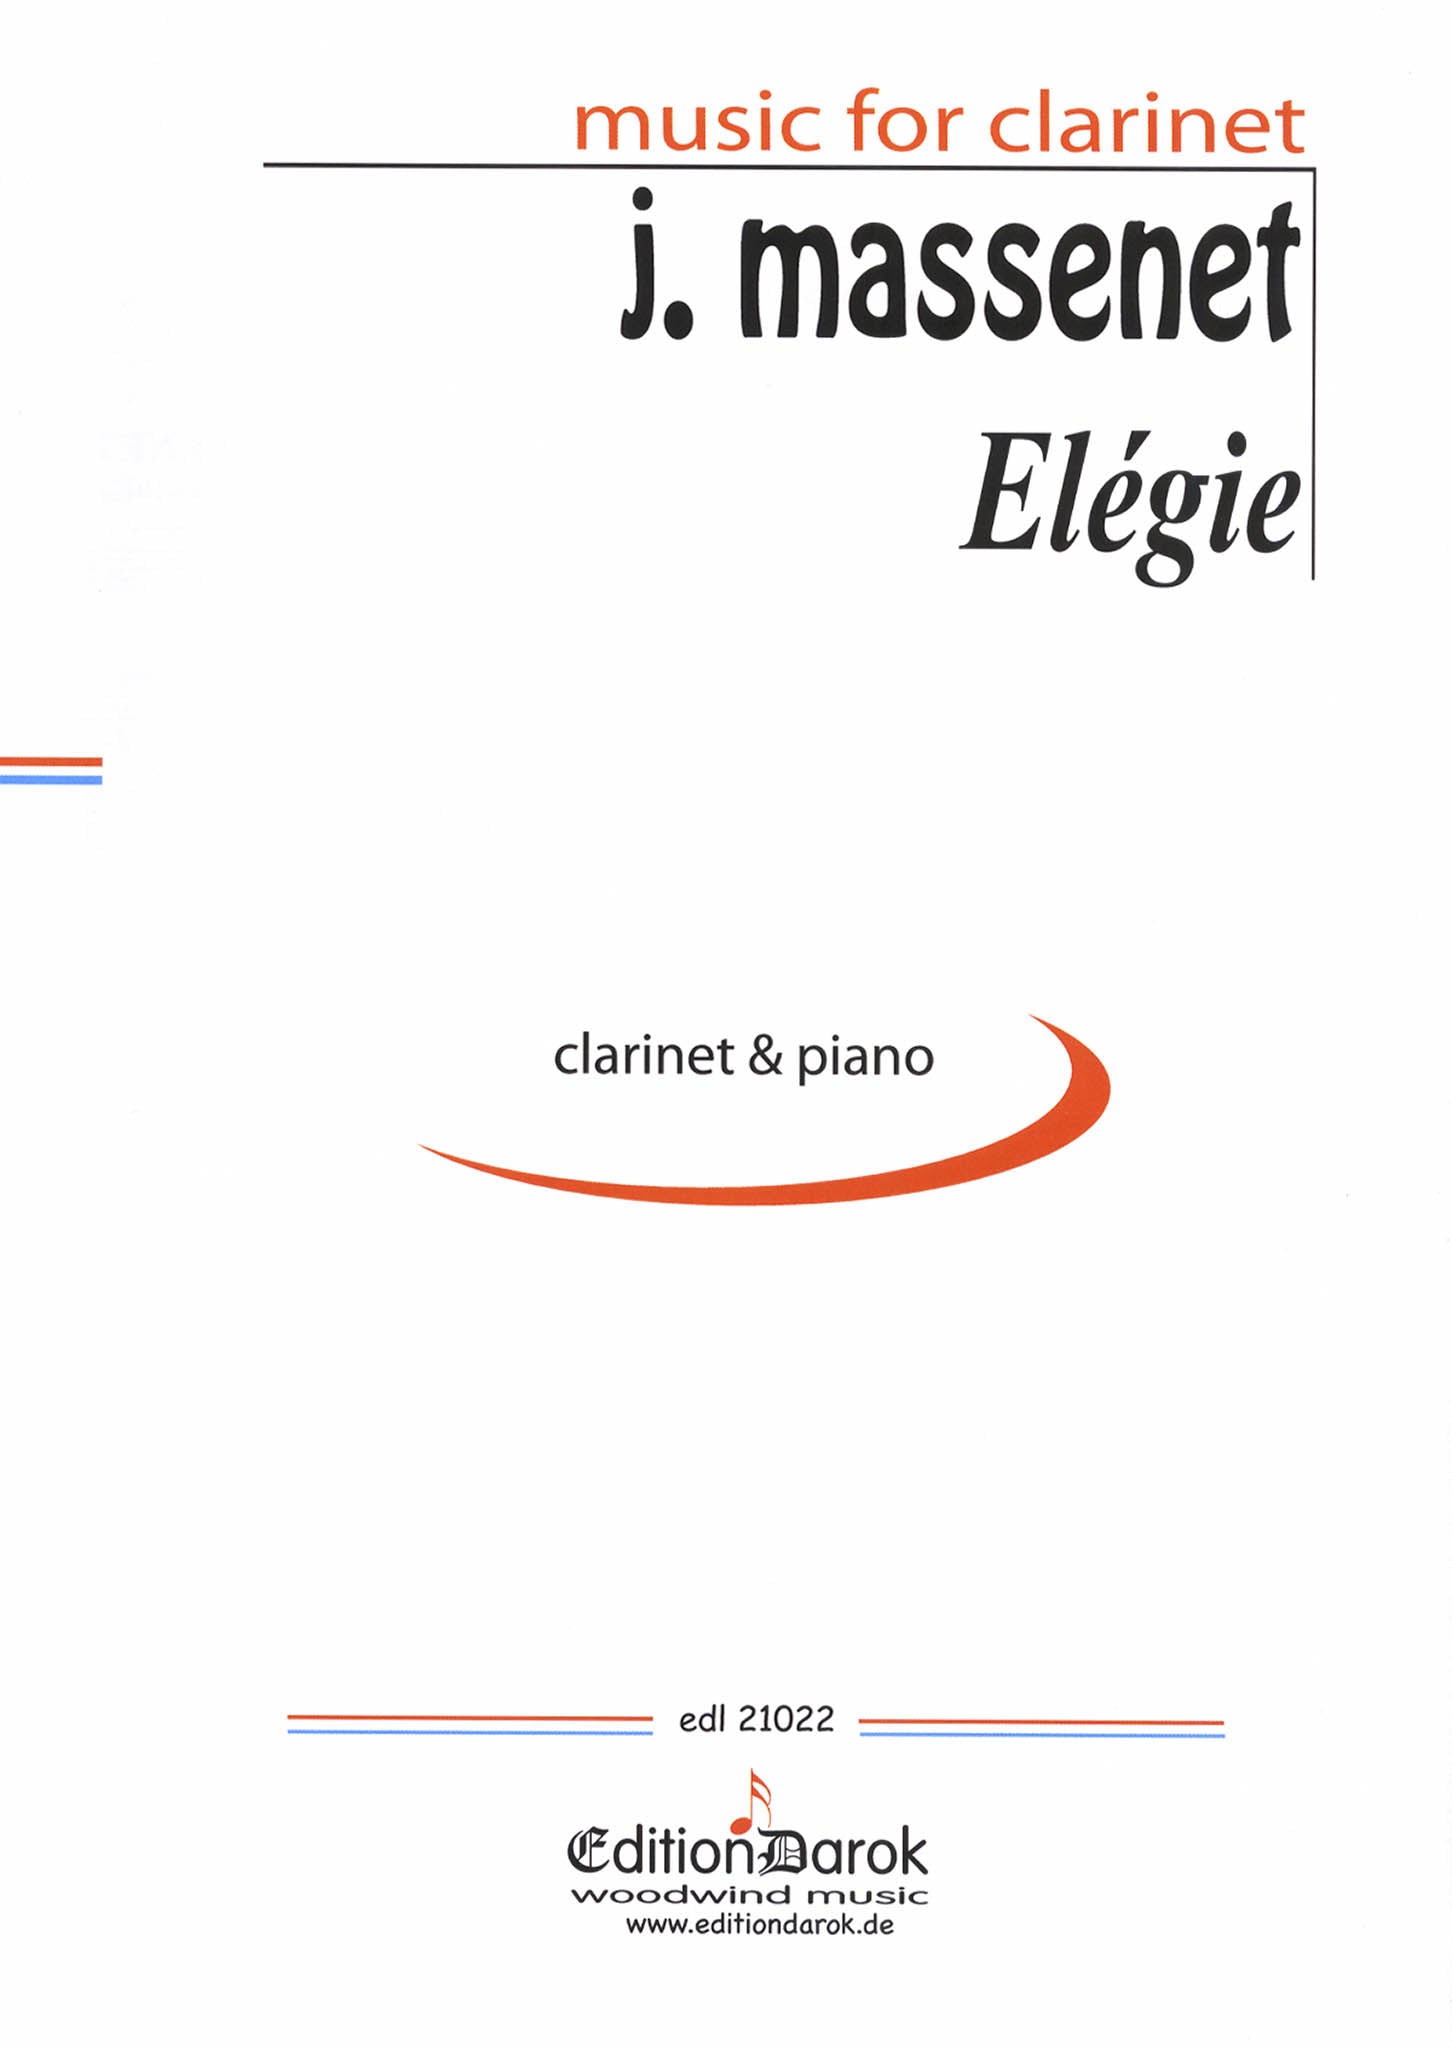 Massenet Élégie clarinet and piano arrangement cover